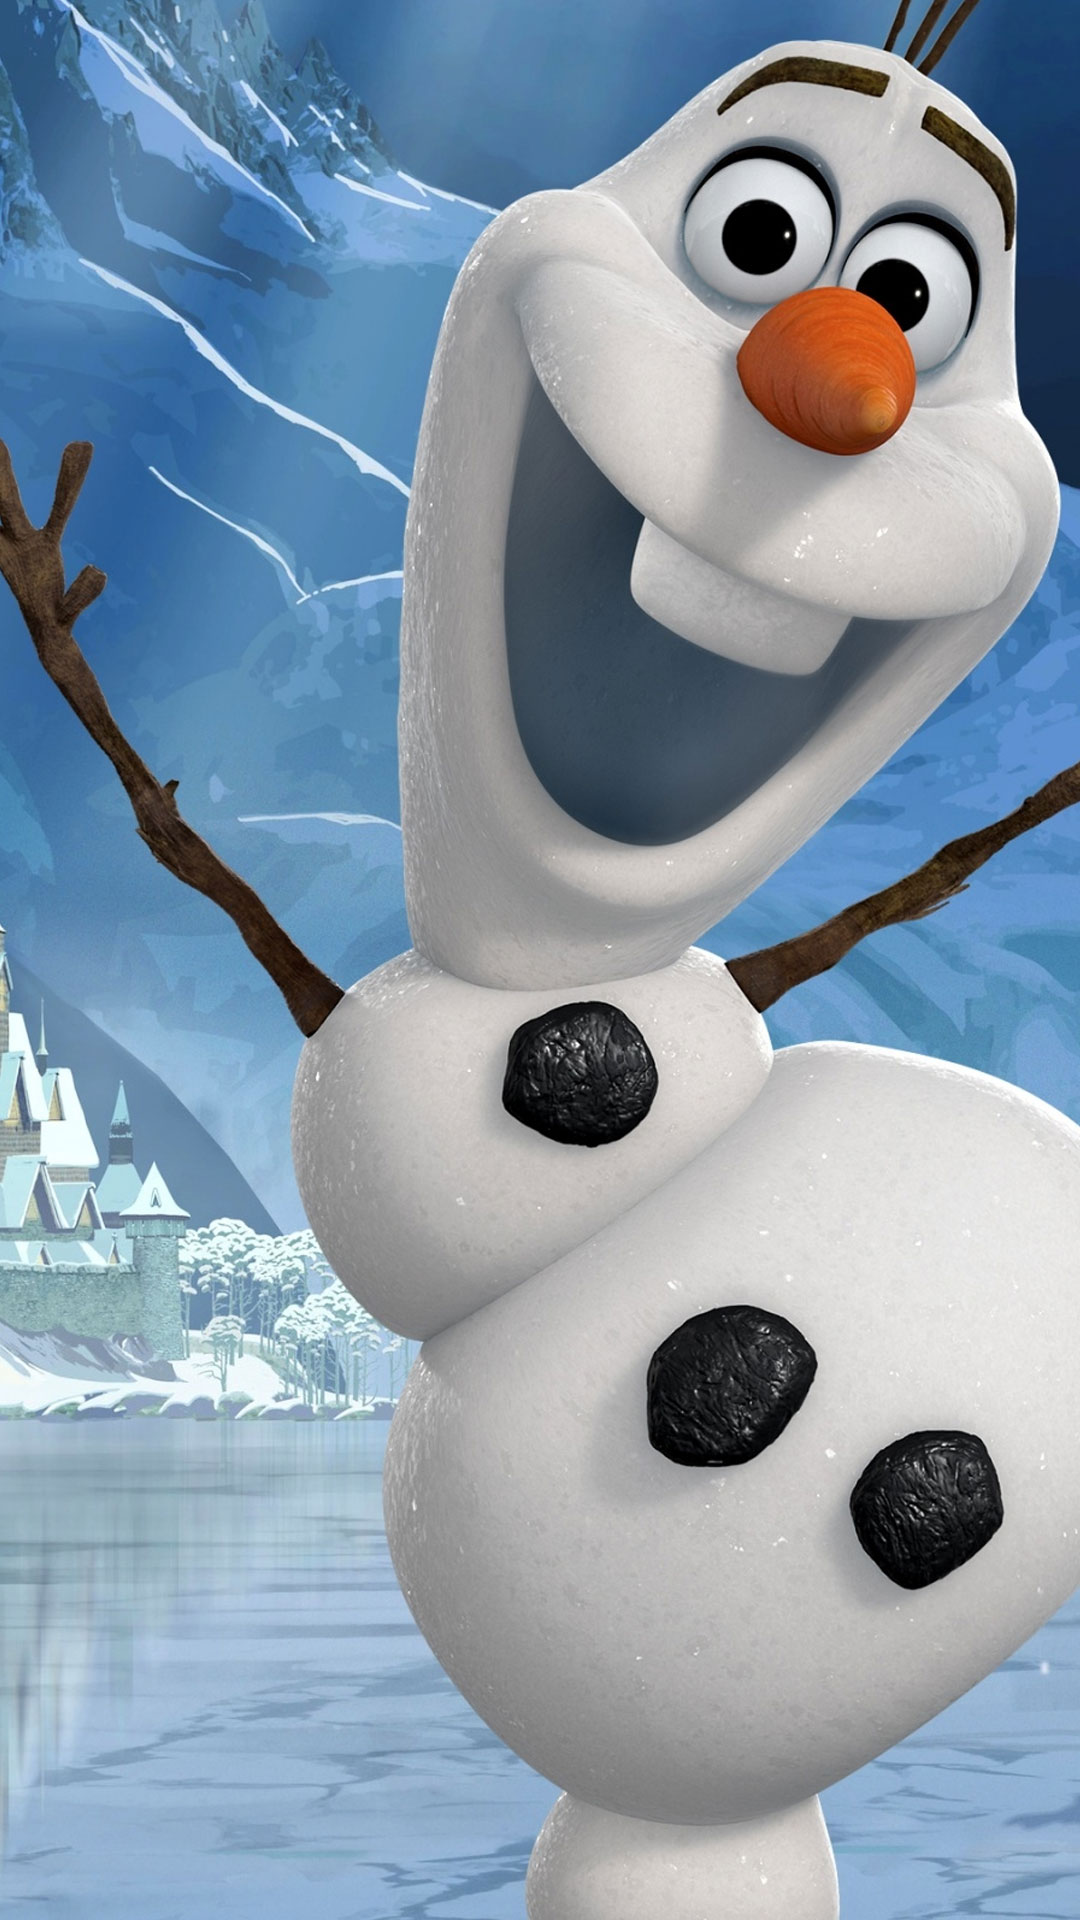 HD Disney Frozen Wallpaper For Mobile Phone